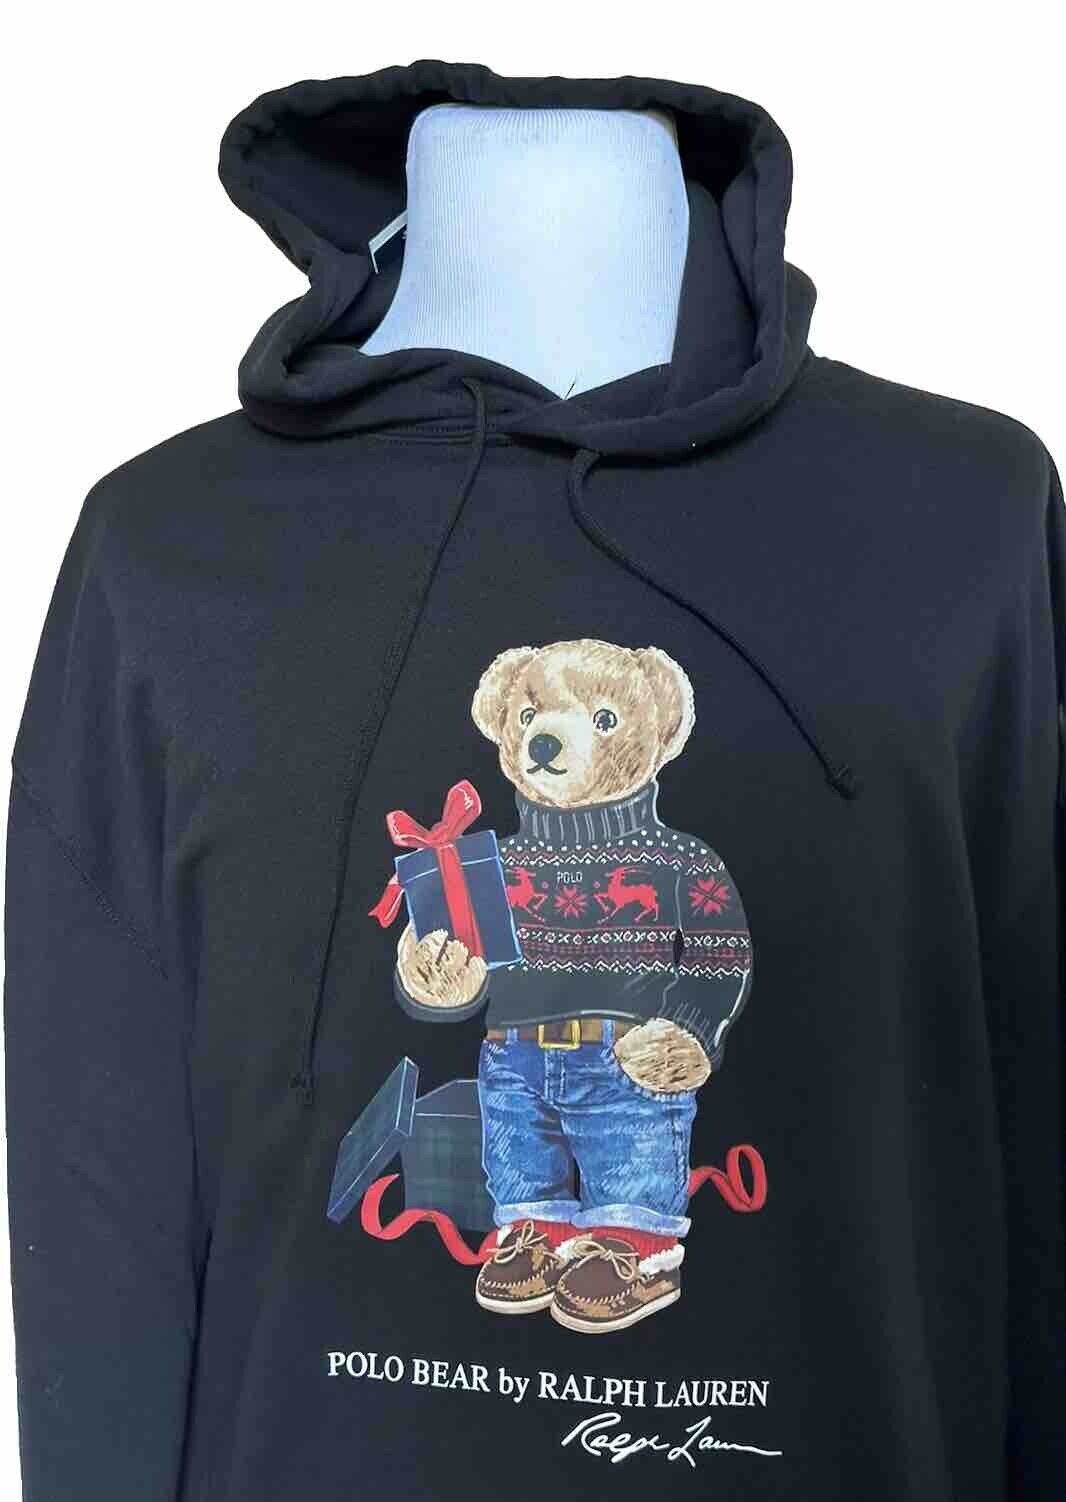 NWT $188 Polo Ralph Lauren Holiday Bear Sweatshirt with Hoodie Black 3XB/3TG